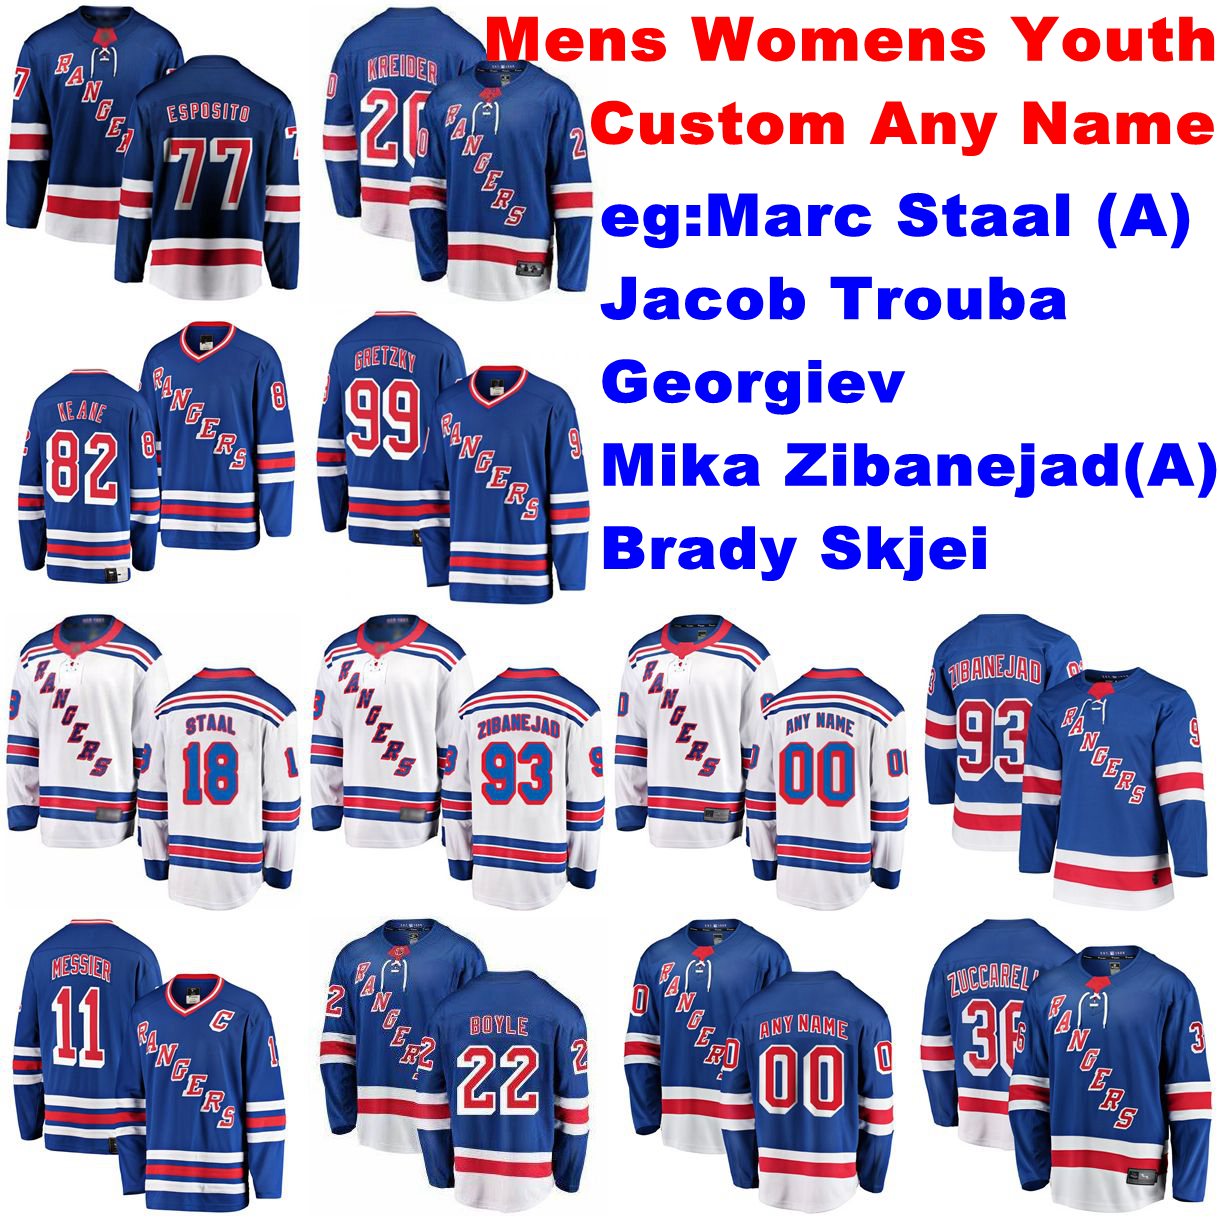 

Womens New York Rangers Jerseys Marc Staal Jersey Jacob Trouba Alexandar Georgiev Zibanejad Skjei Ice Hockey Jerseys Customize Stitched, Youth blue home